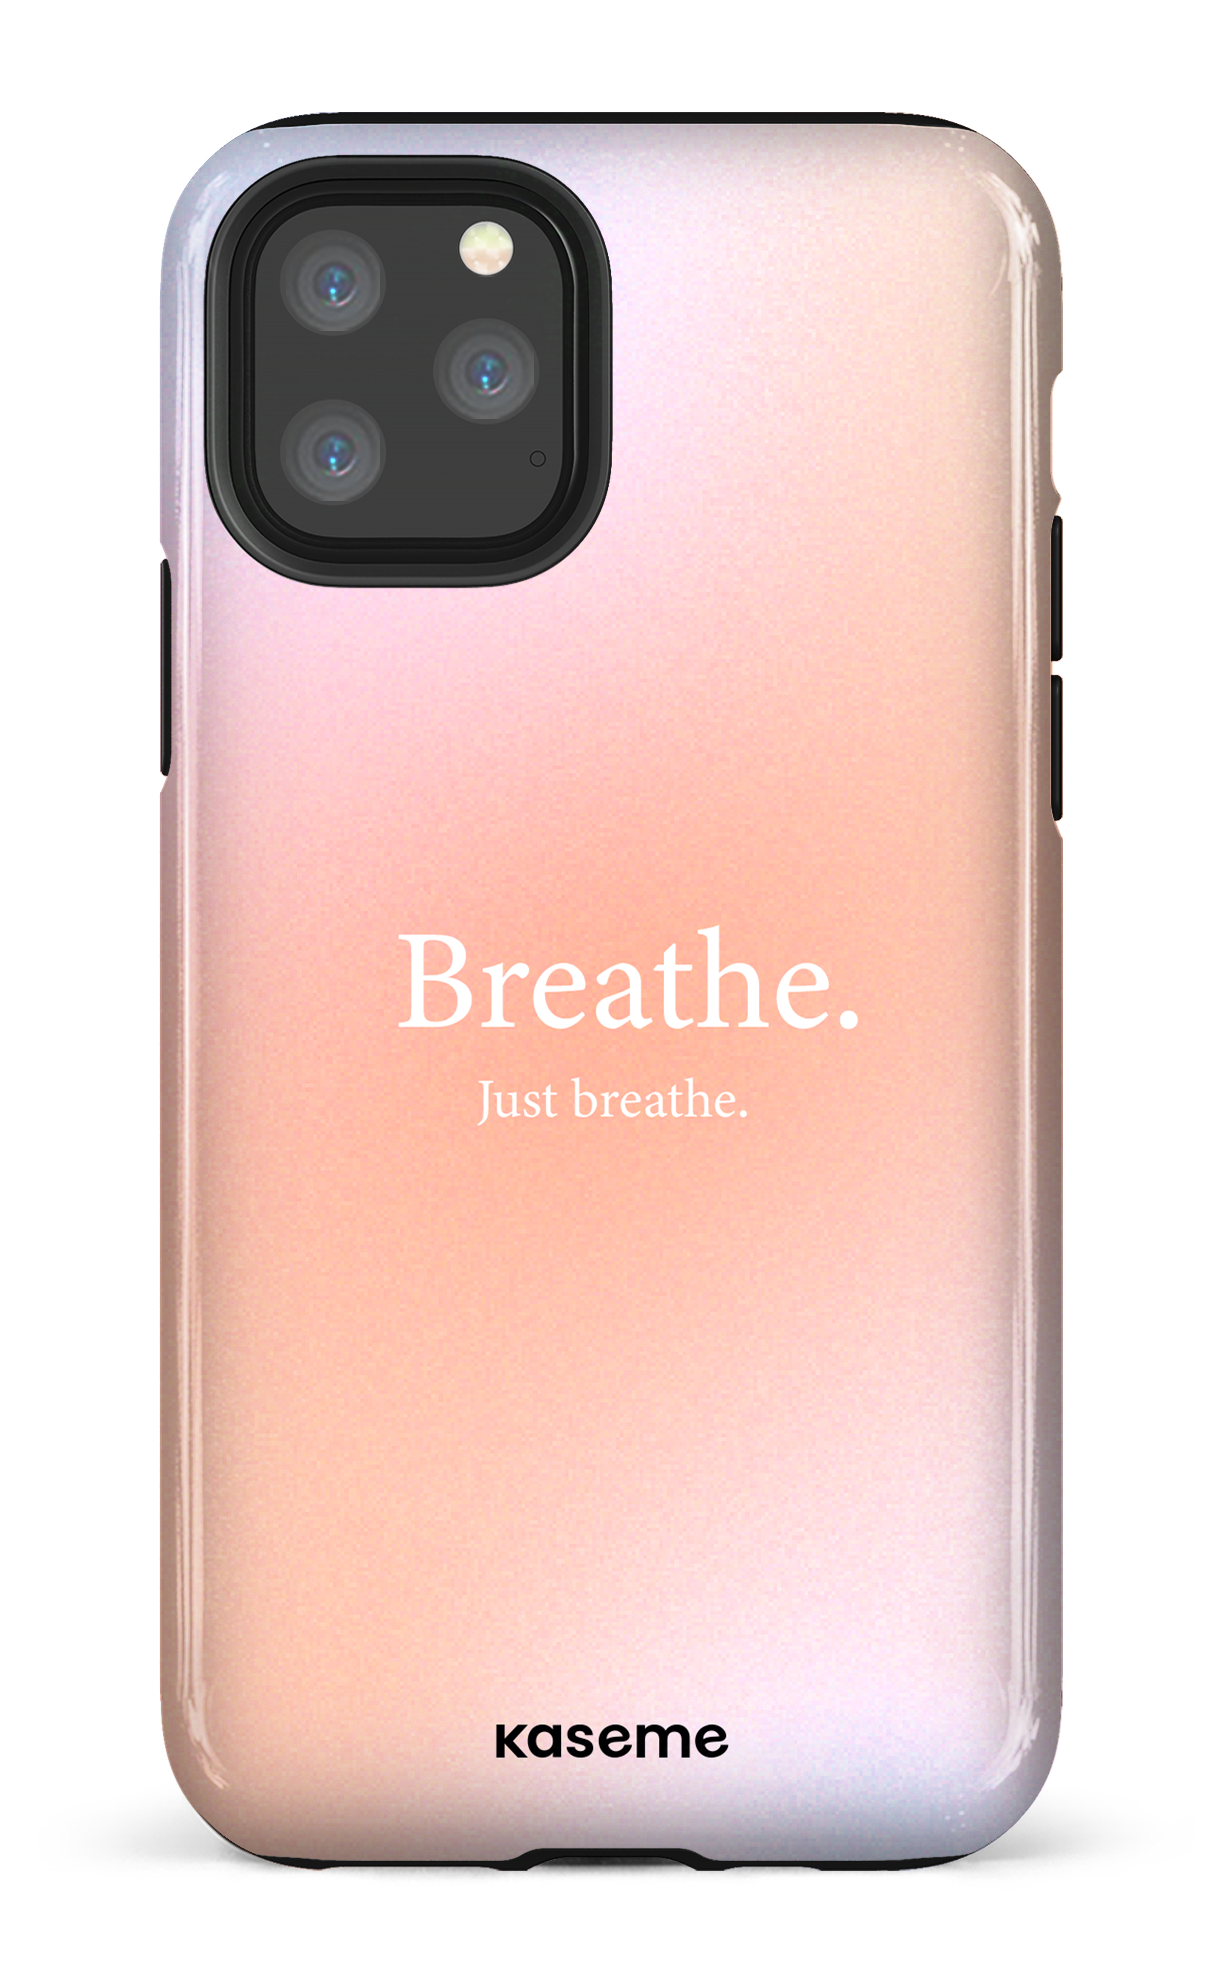 Just breathe - iPhone 11 Pro